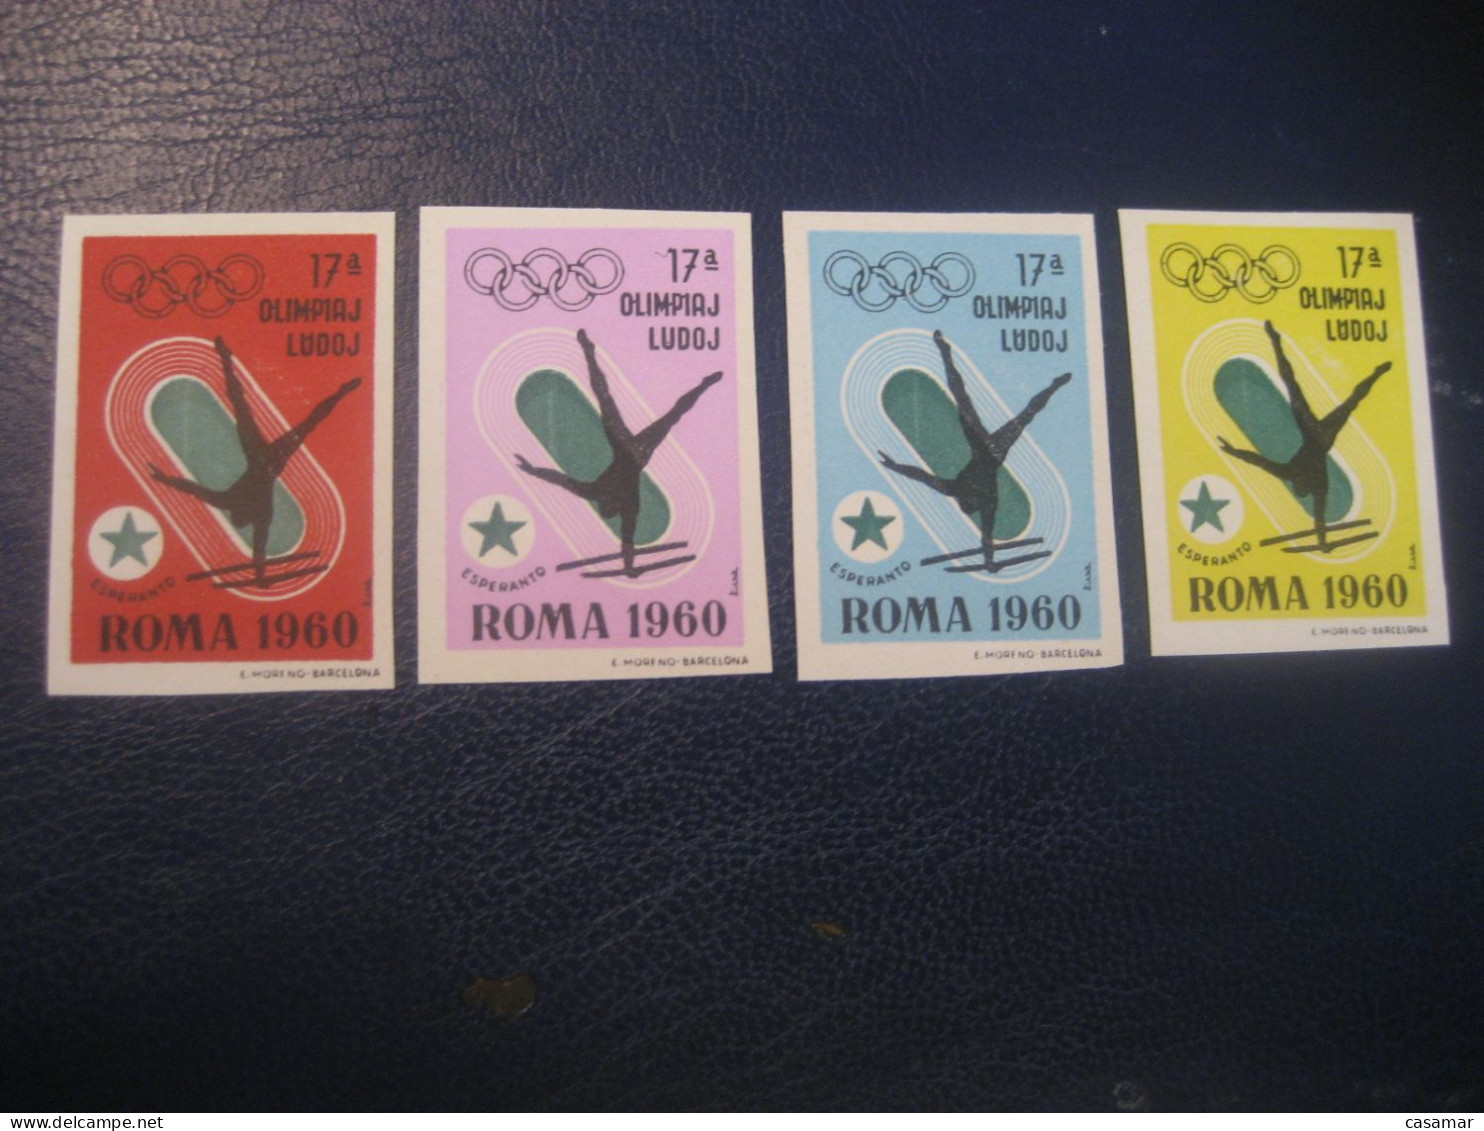 ROMA 1960 Gymnastics Gymnastique Olympic Games Olympics Esperanto 4 Imperforated Poster Stamp Vignette ITALY Spain Label - Gimnasia